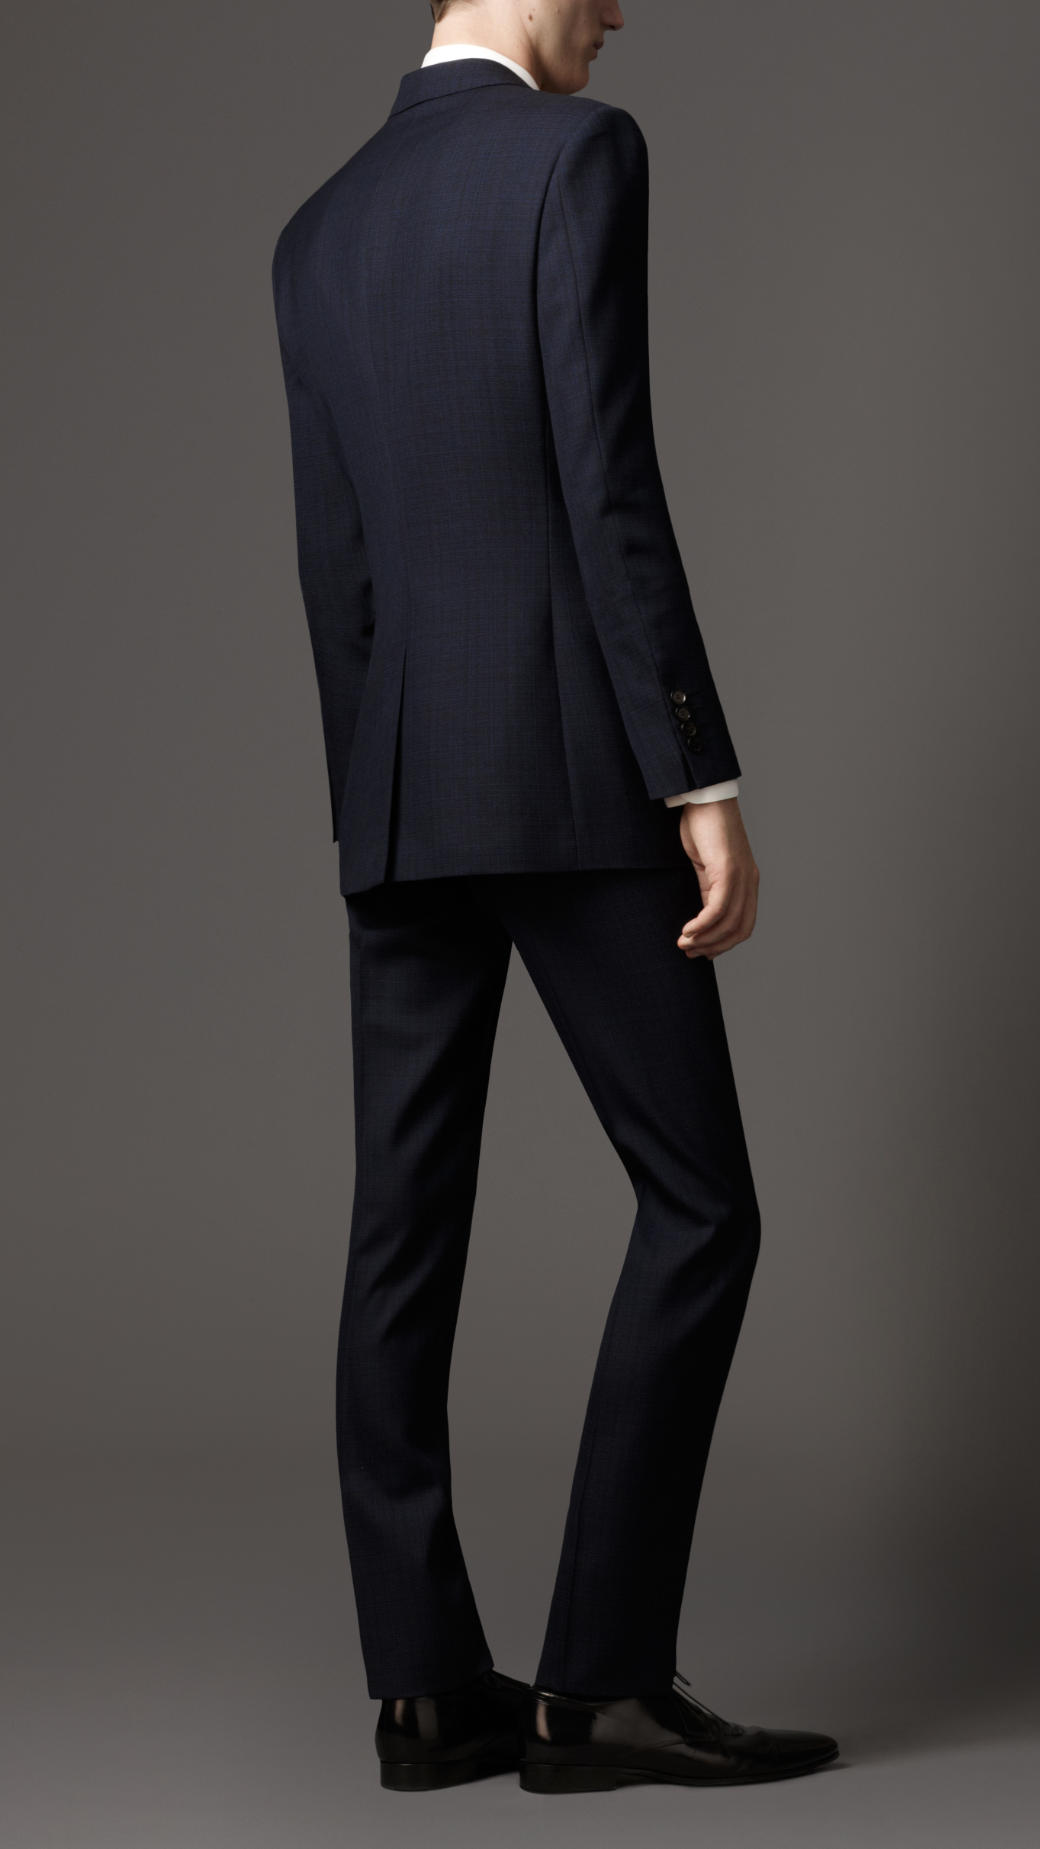 Burberry Slim Fit Virgin Wool Suit in Blue for Men - Lyst